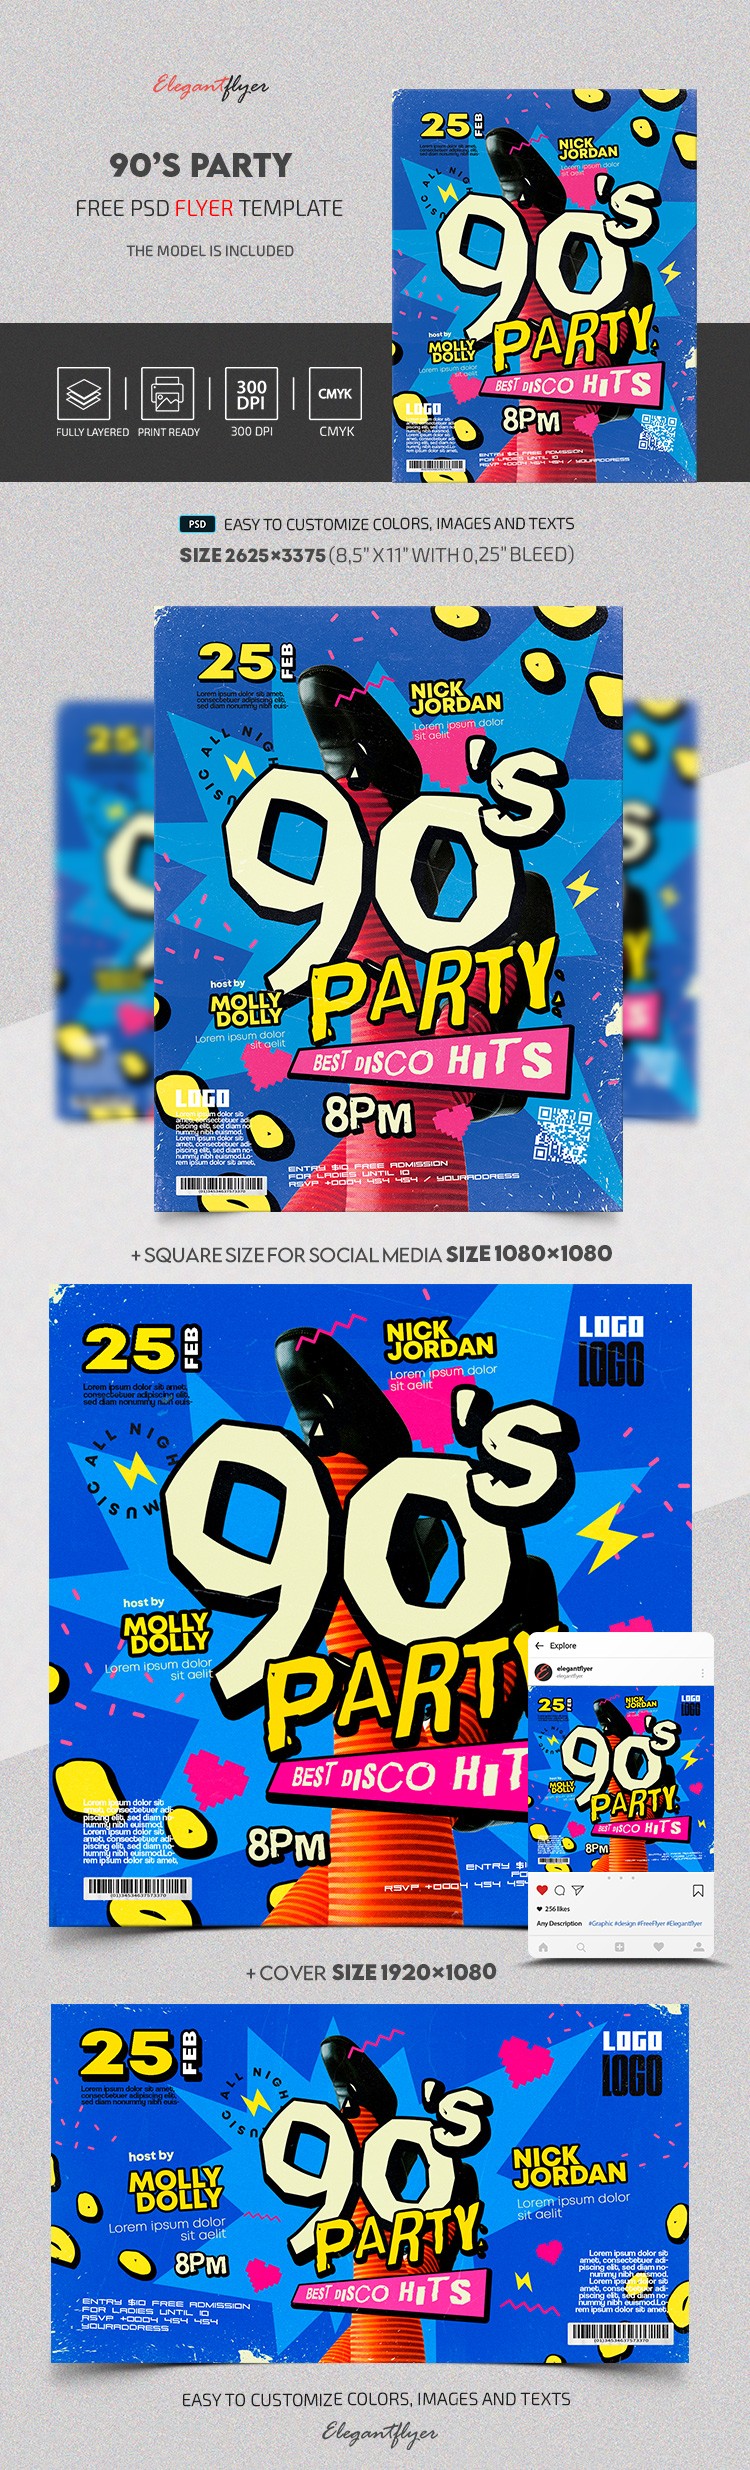 90's Party by ElegantFlyer